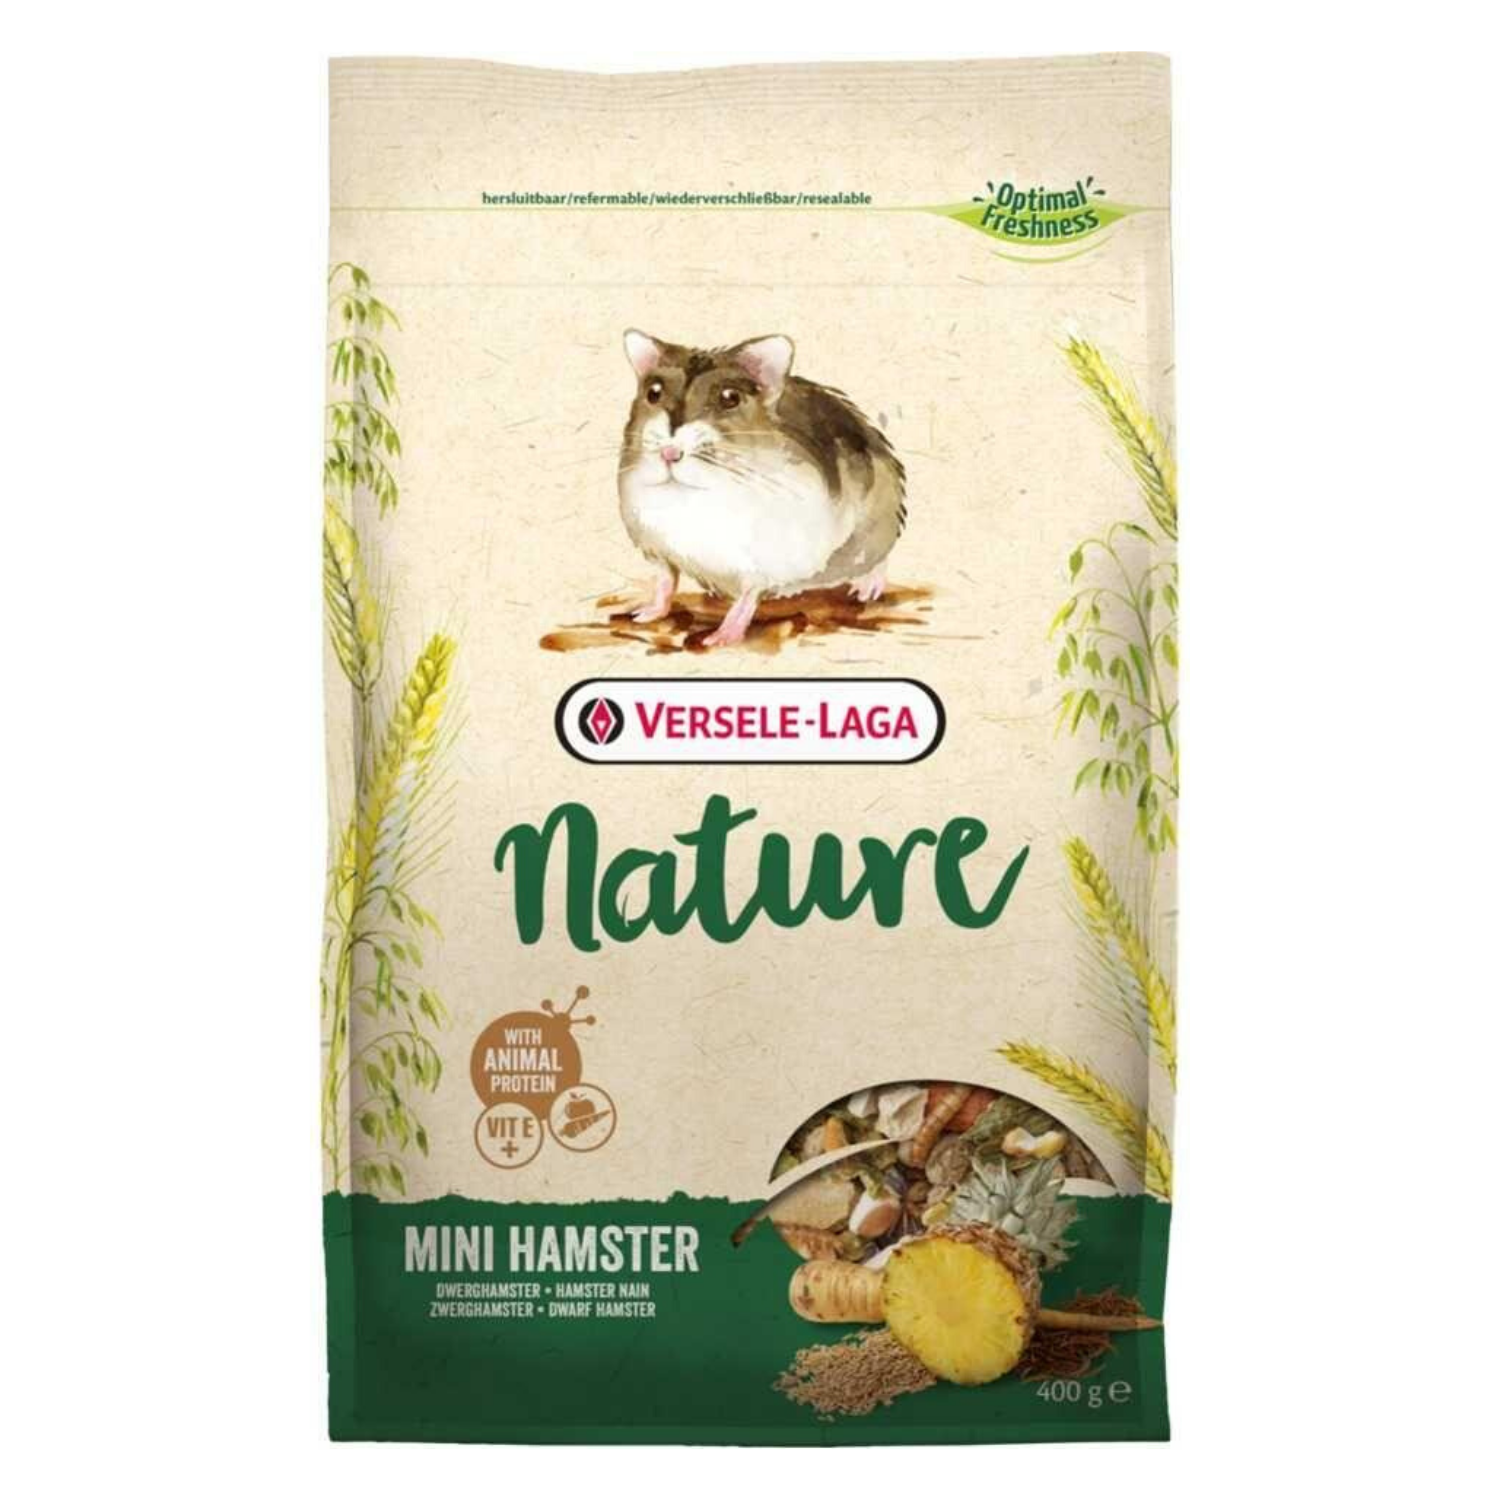 Versele-Laga Nature Mini Hamster - 400g